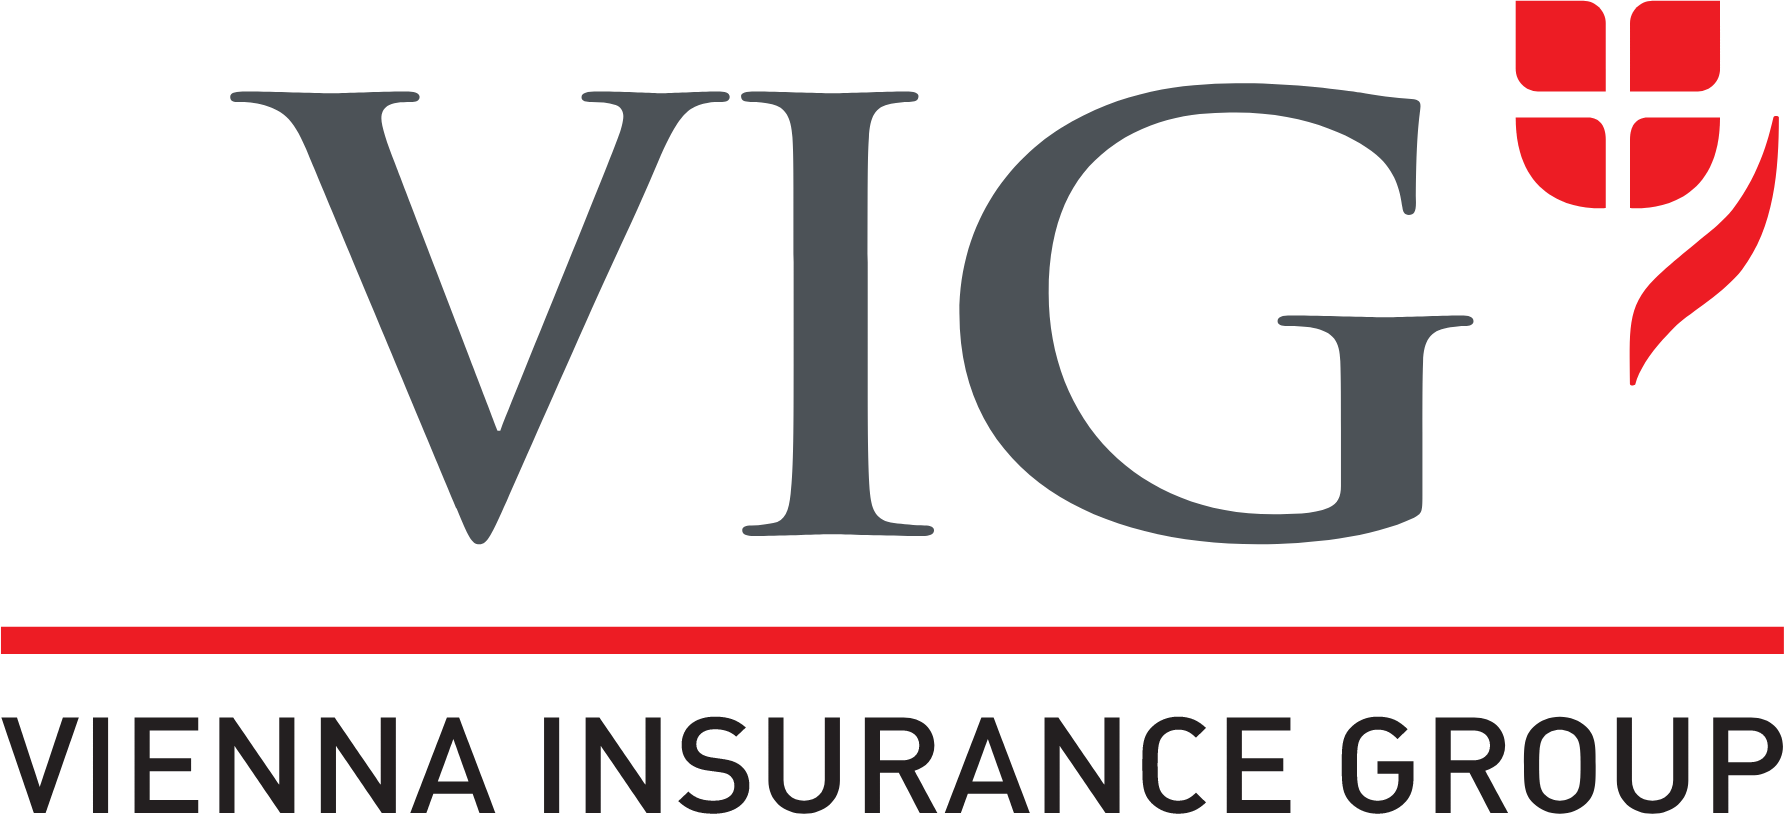 Vienna Insurance Group logo large (transparent PNG)